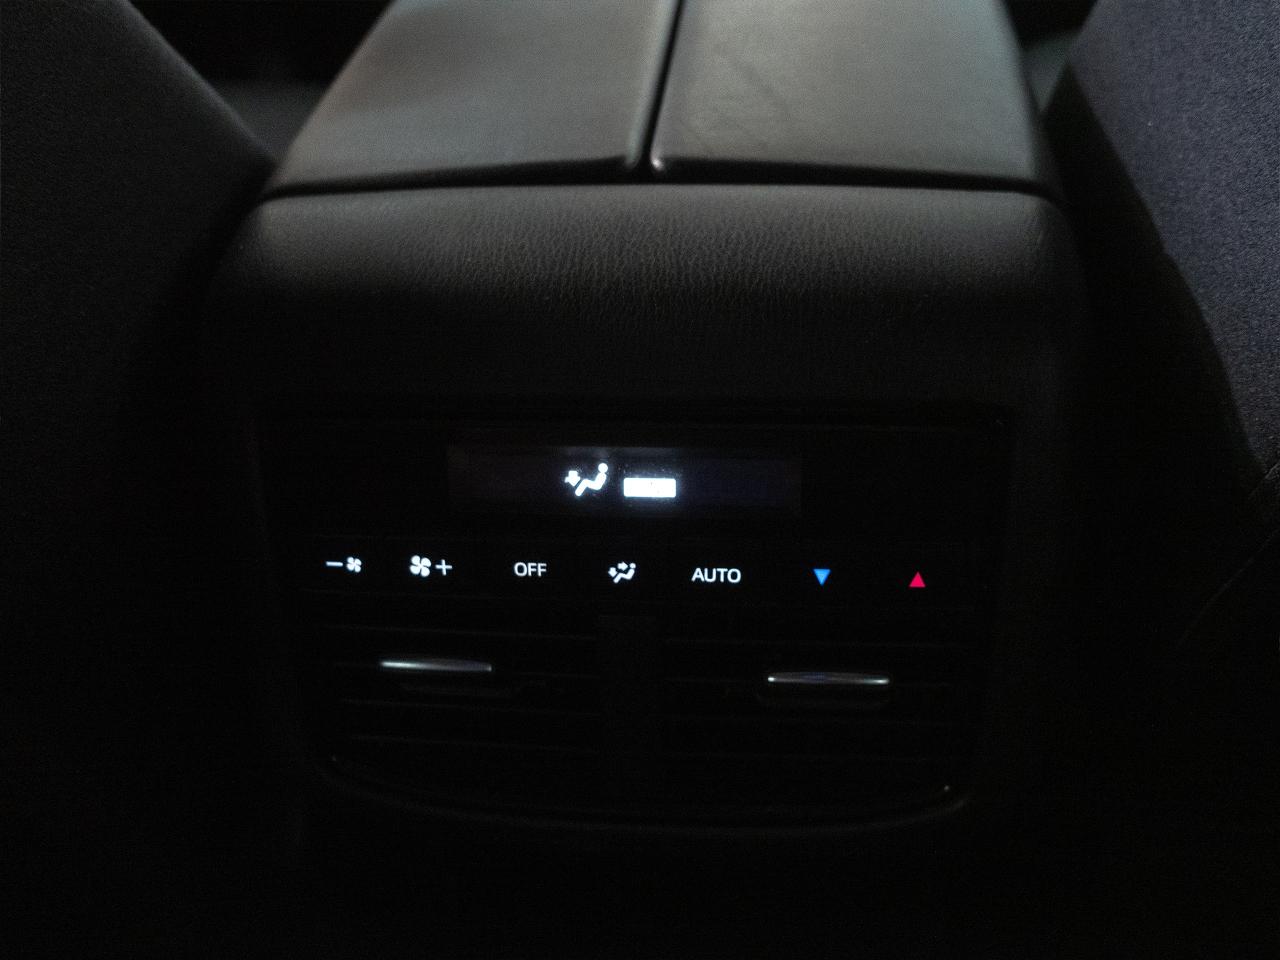 2016 Mazda CX-9 GS | 7 Pass | Nav | DVD | Backup Cam | Bluetooth